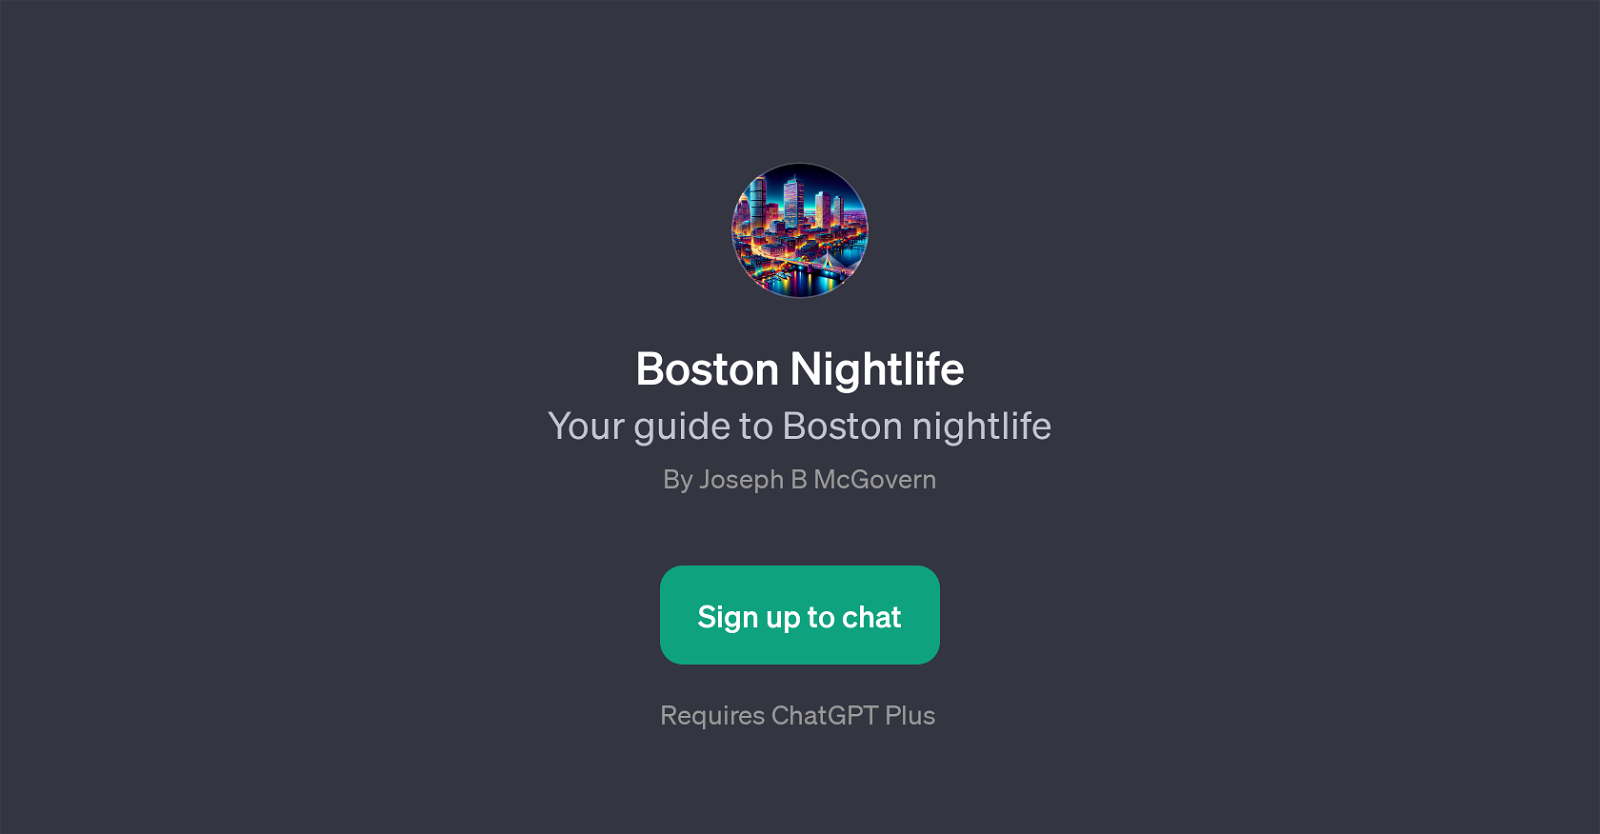 Boston Nightlife website